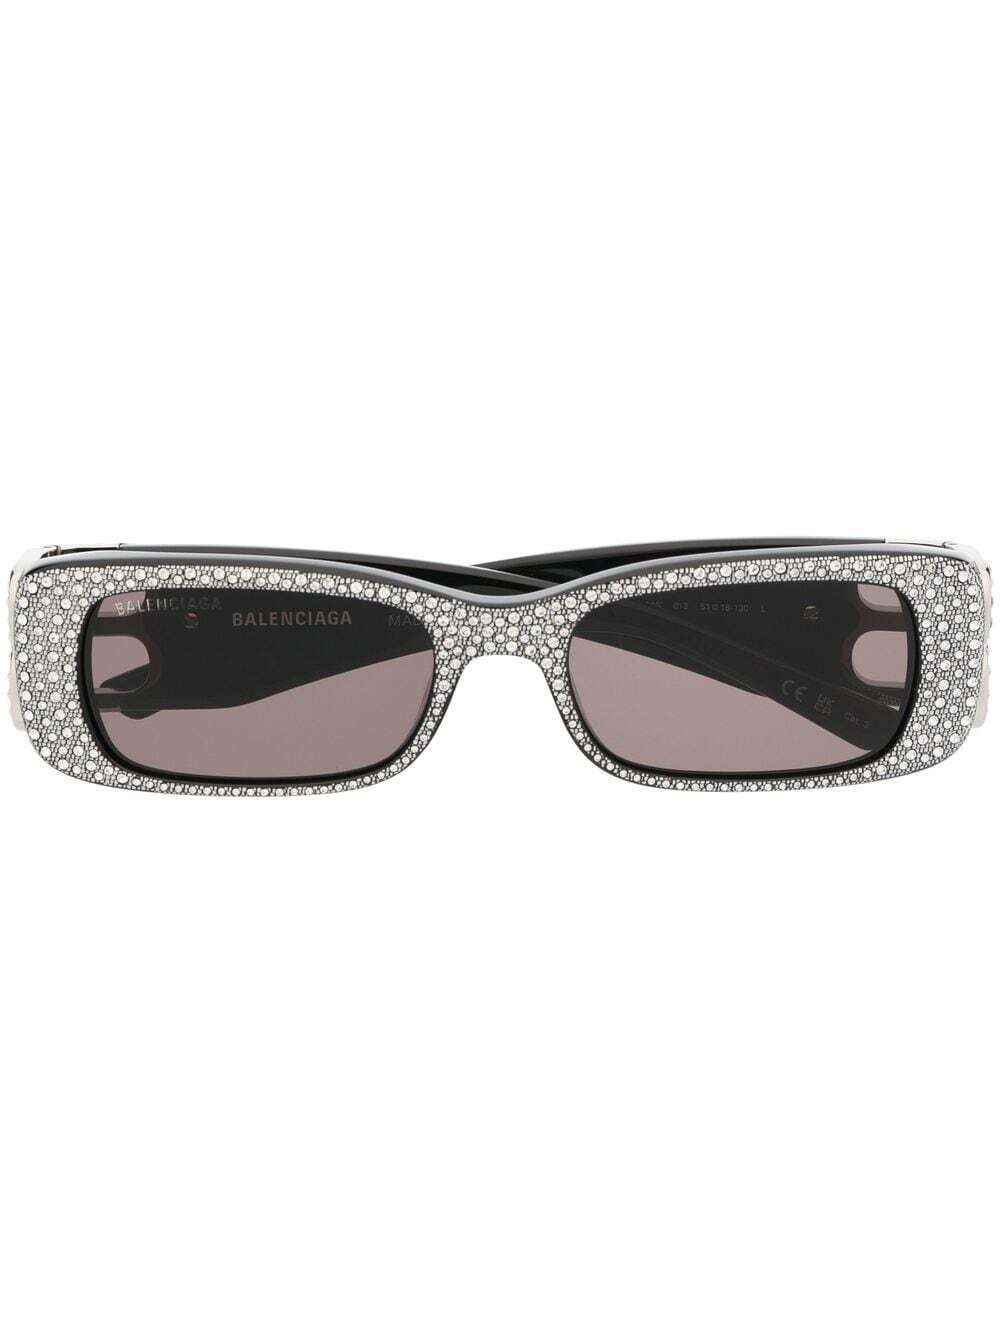 Balenciaga Dynasty rectangle frame sunglasses - Black